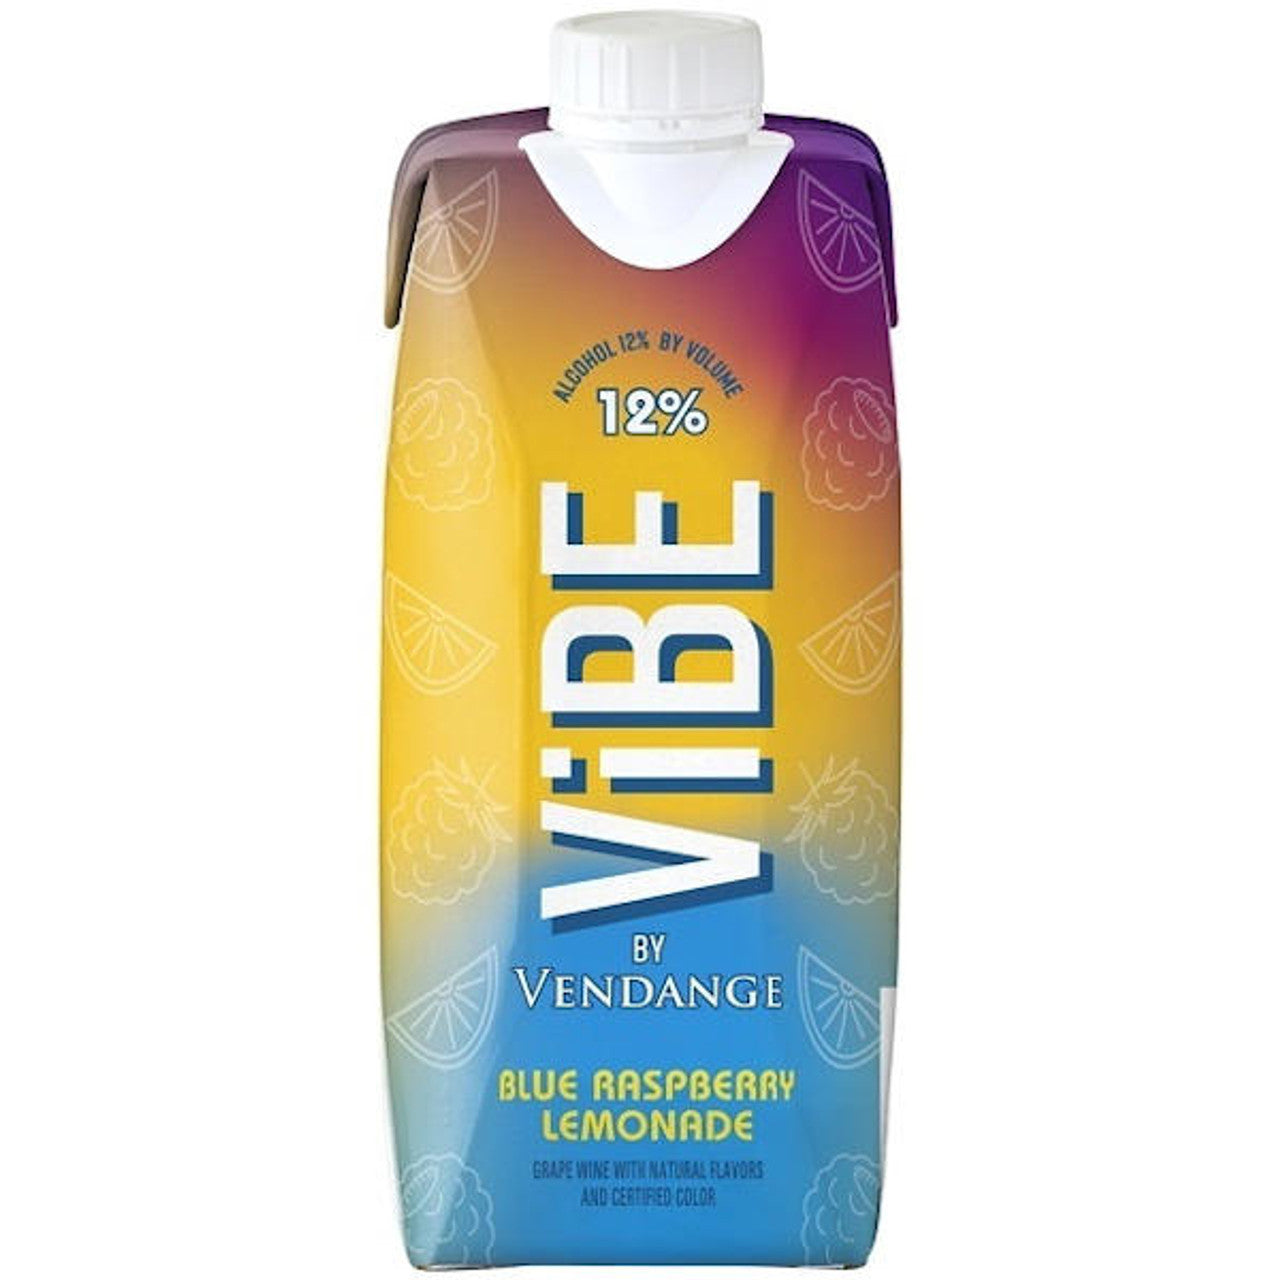 Vibe by Vendange Blue Raspberry Lemonade